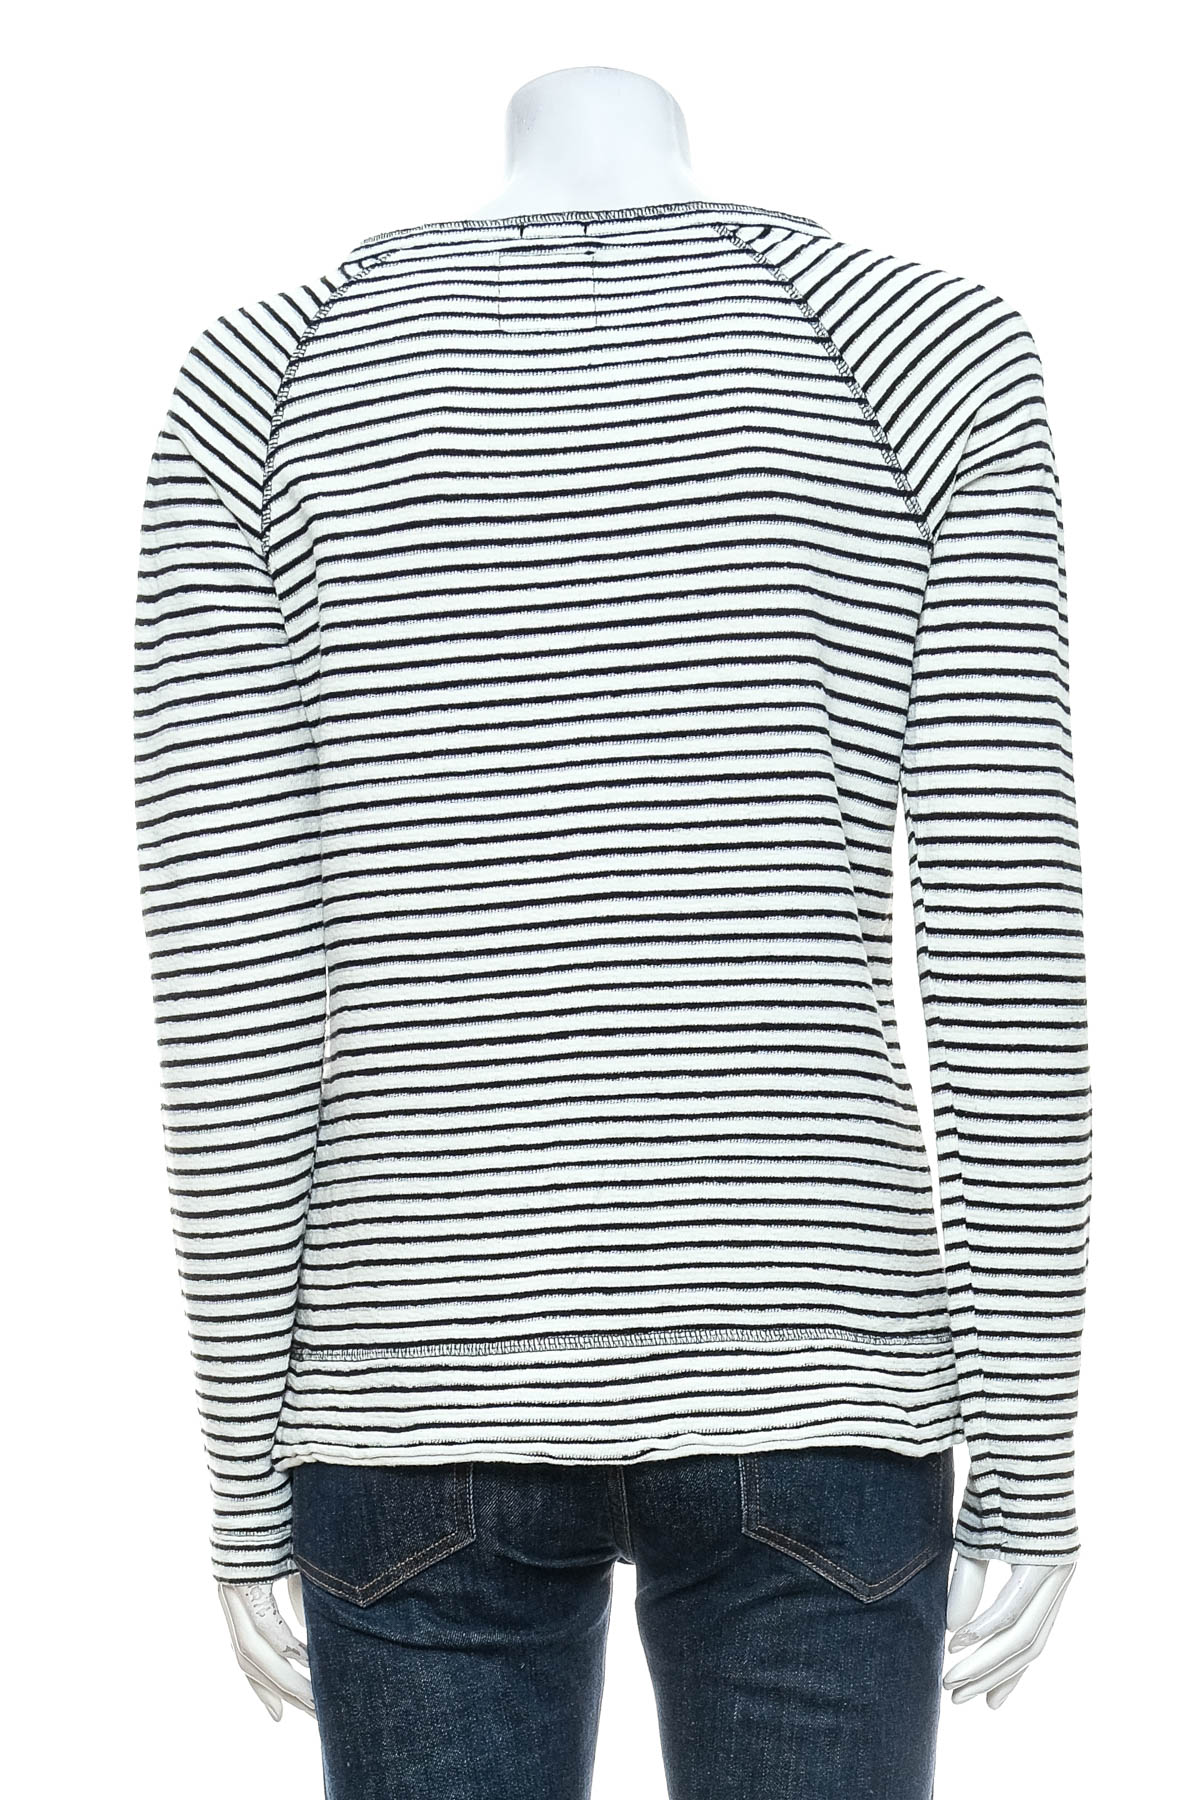 Women's sweater - SuperDry - 1